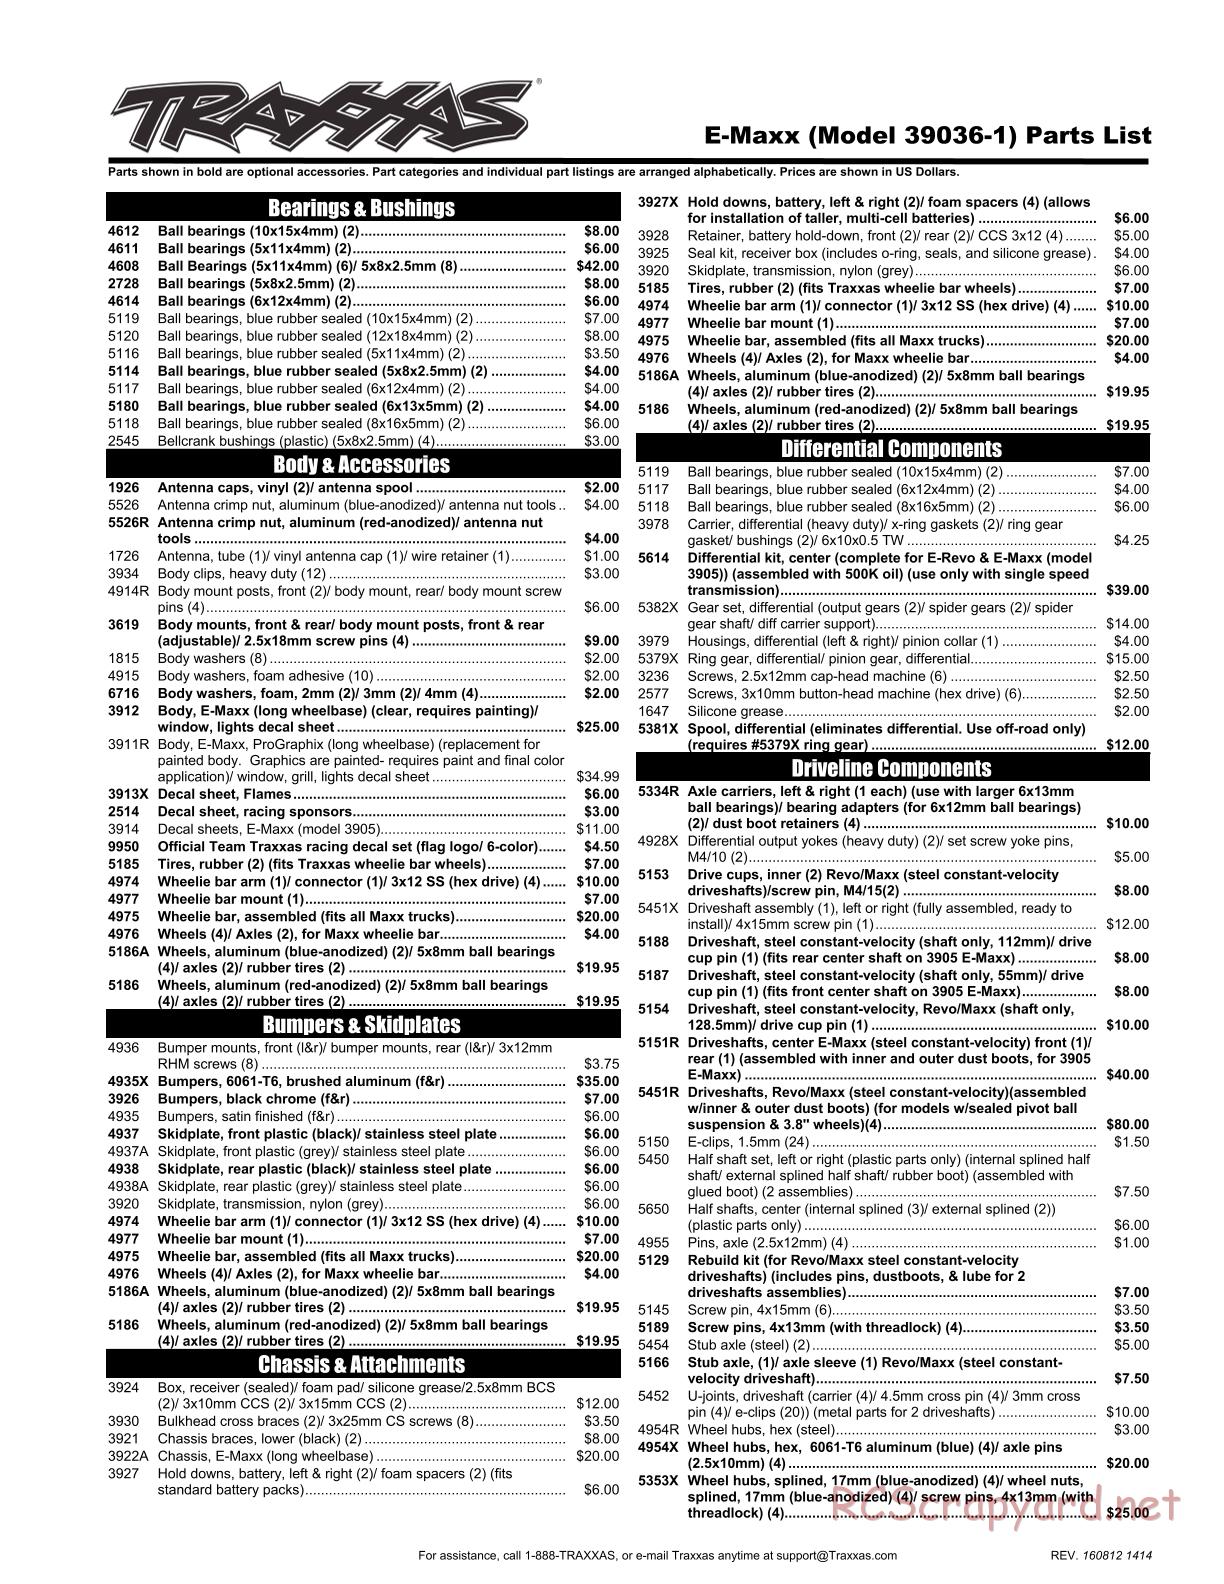 Traxxas - E-Maxx (2015) - Parts List - Page 1